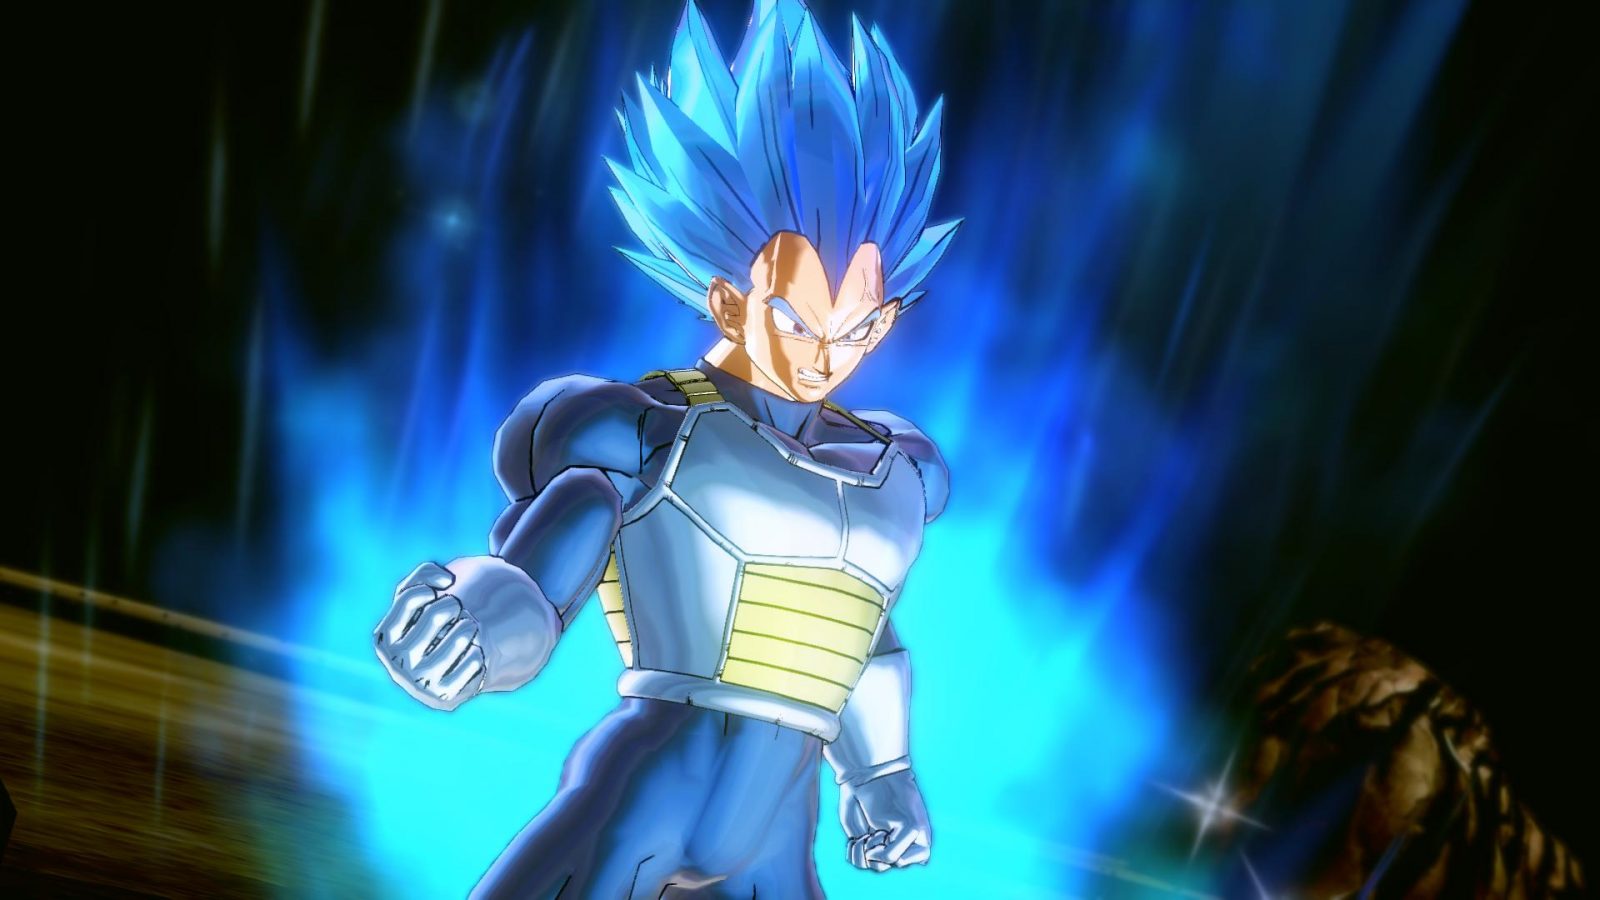 Dragon Ball Xenoverse 2 (Switch) receberá Vegeta Super Saiyan Blue Evolved  - Nintendo Blast